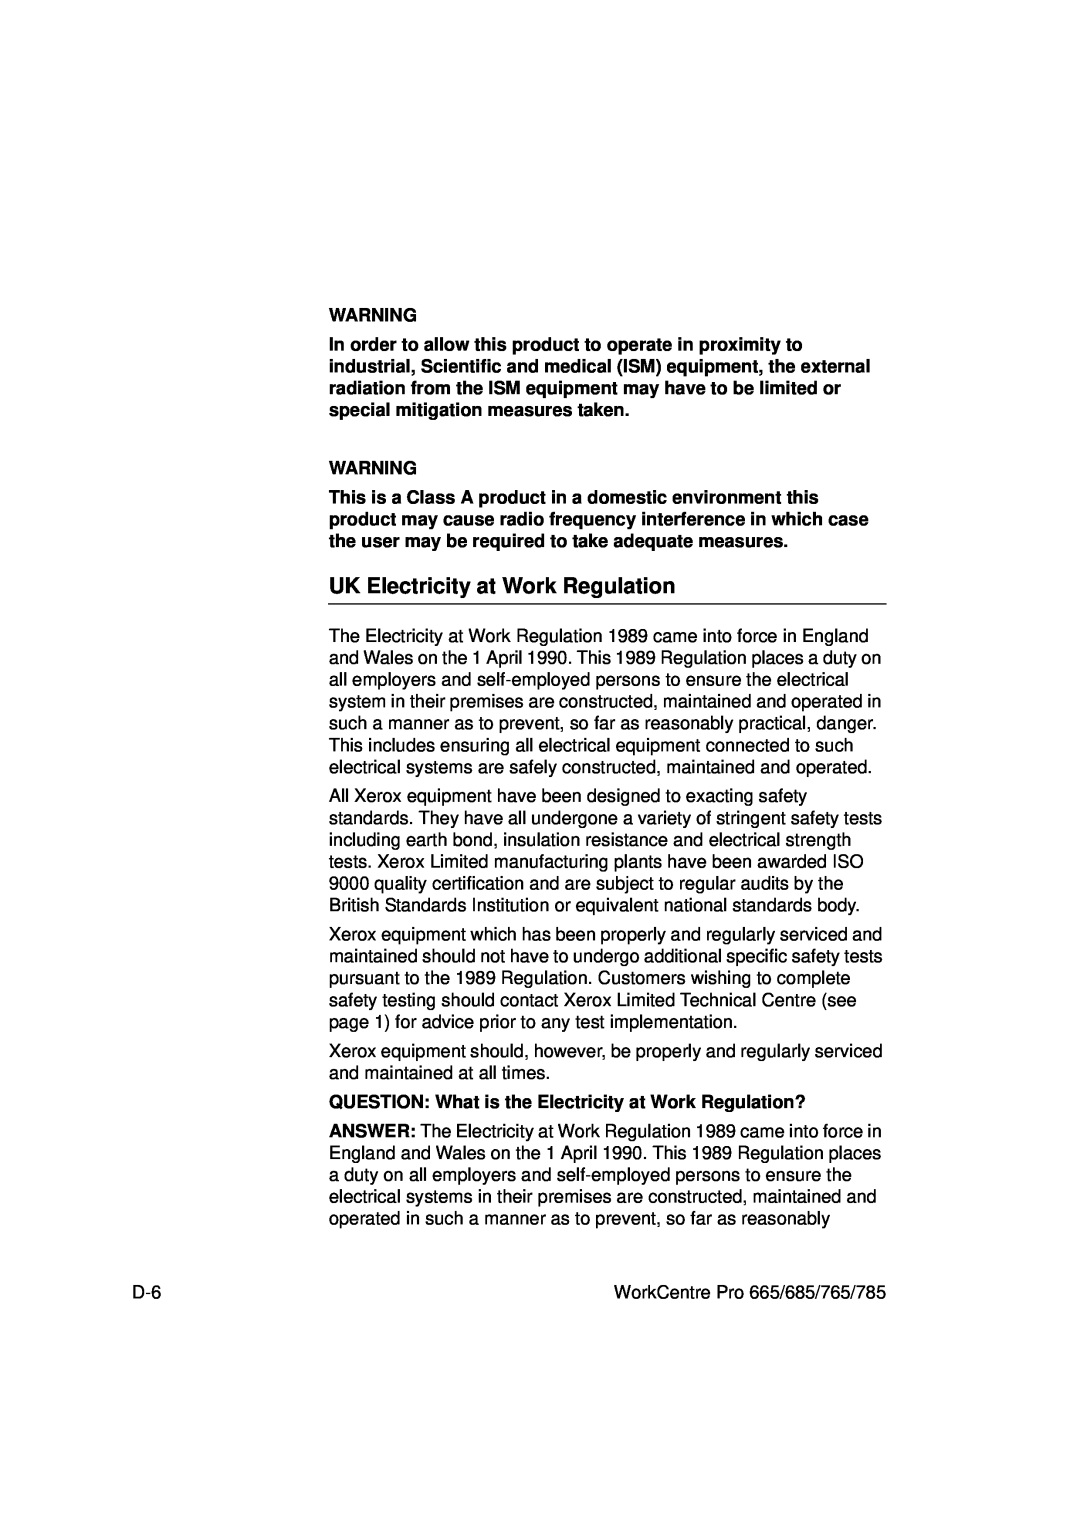 Xerox 685, 765, 665, 785 manual UK Electricity at Work Regulation 